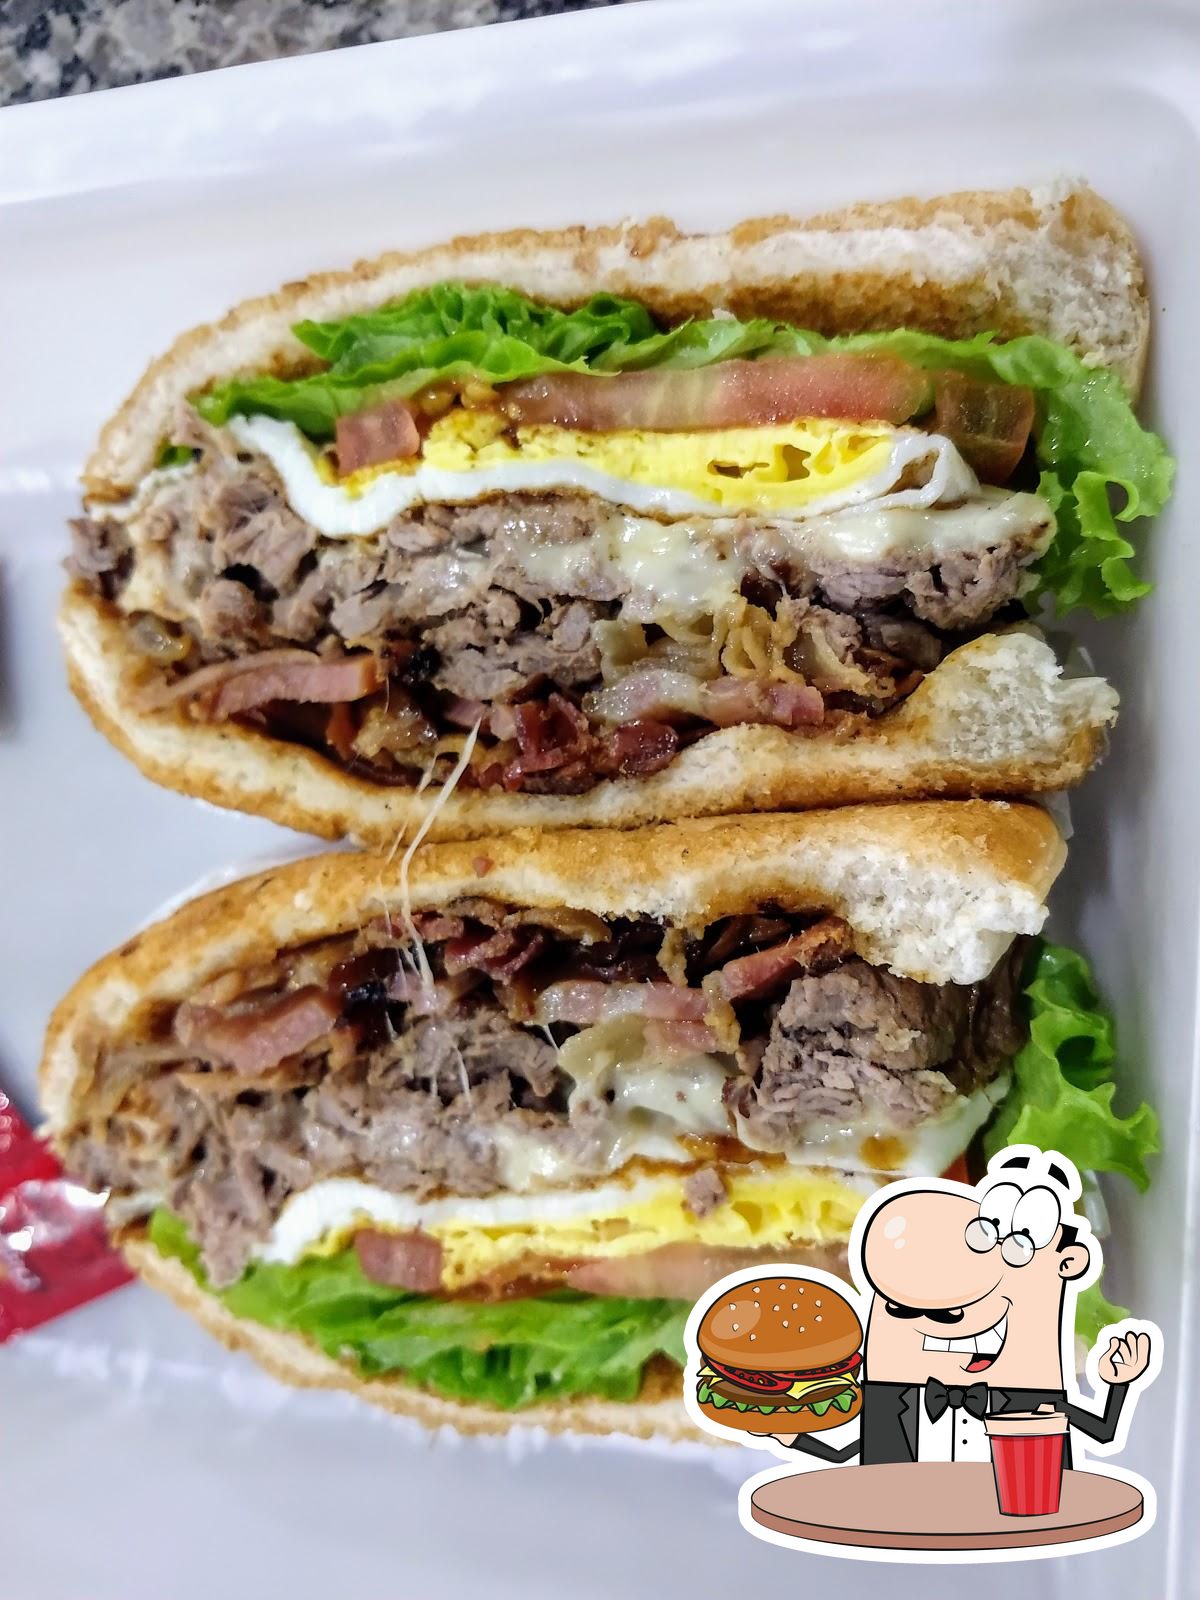 Cidão Lanches - Burger Joint in Três Lagoas